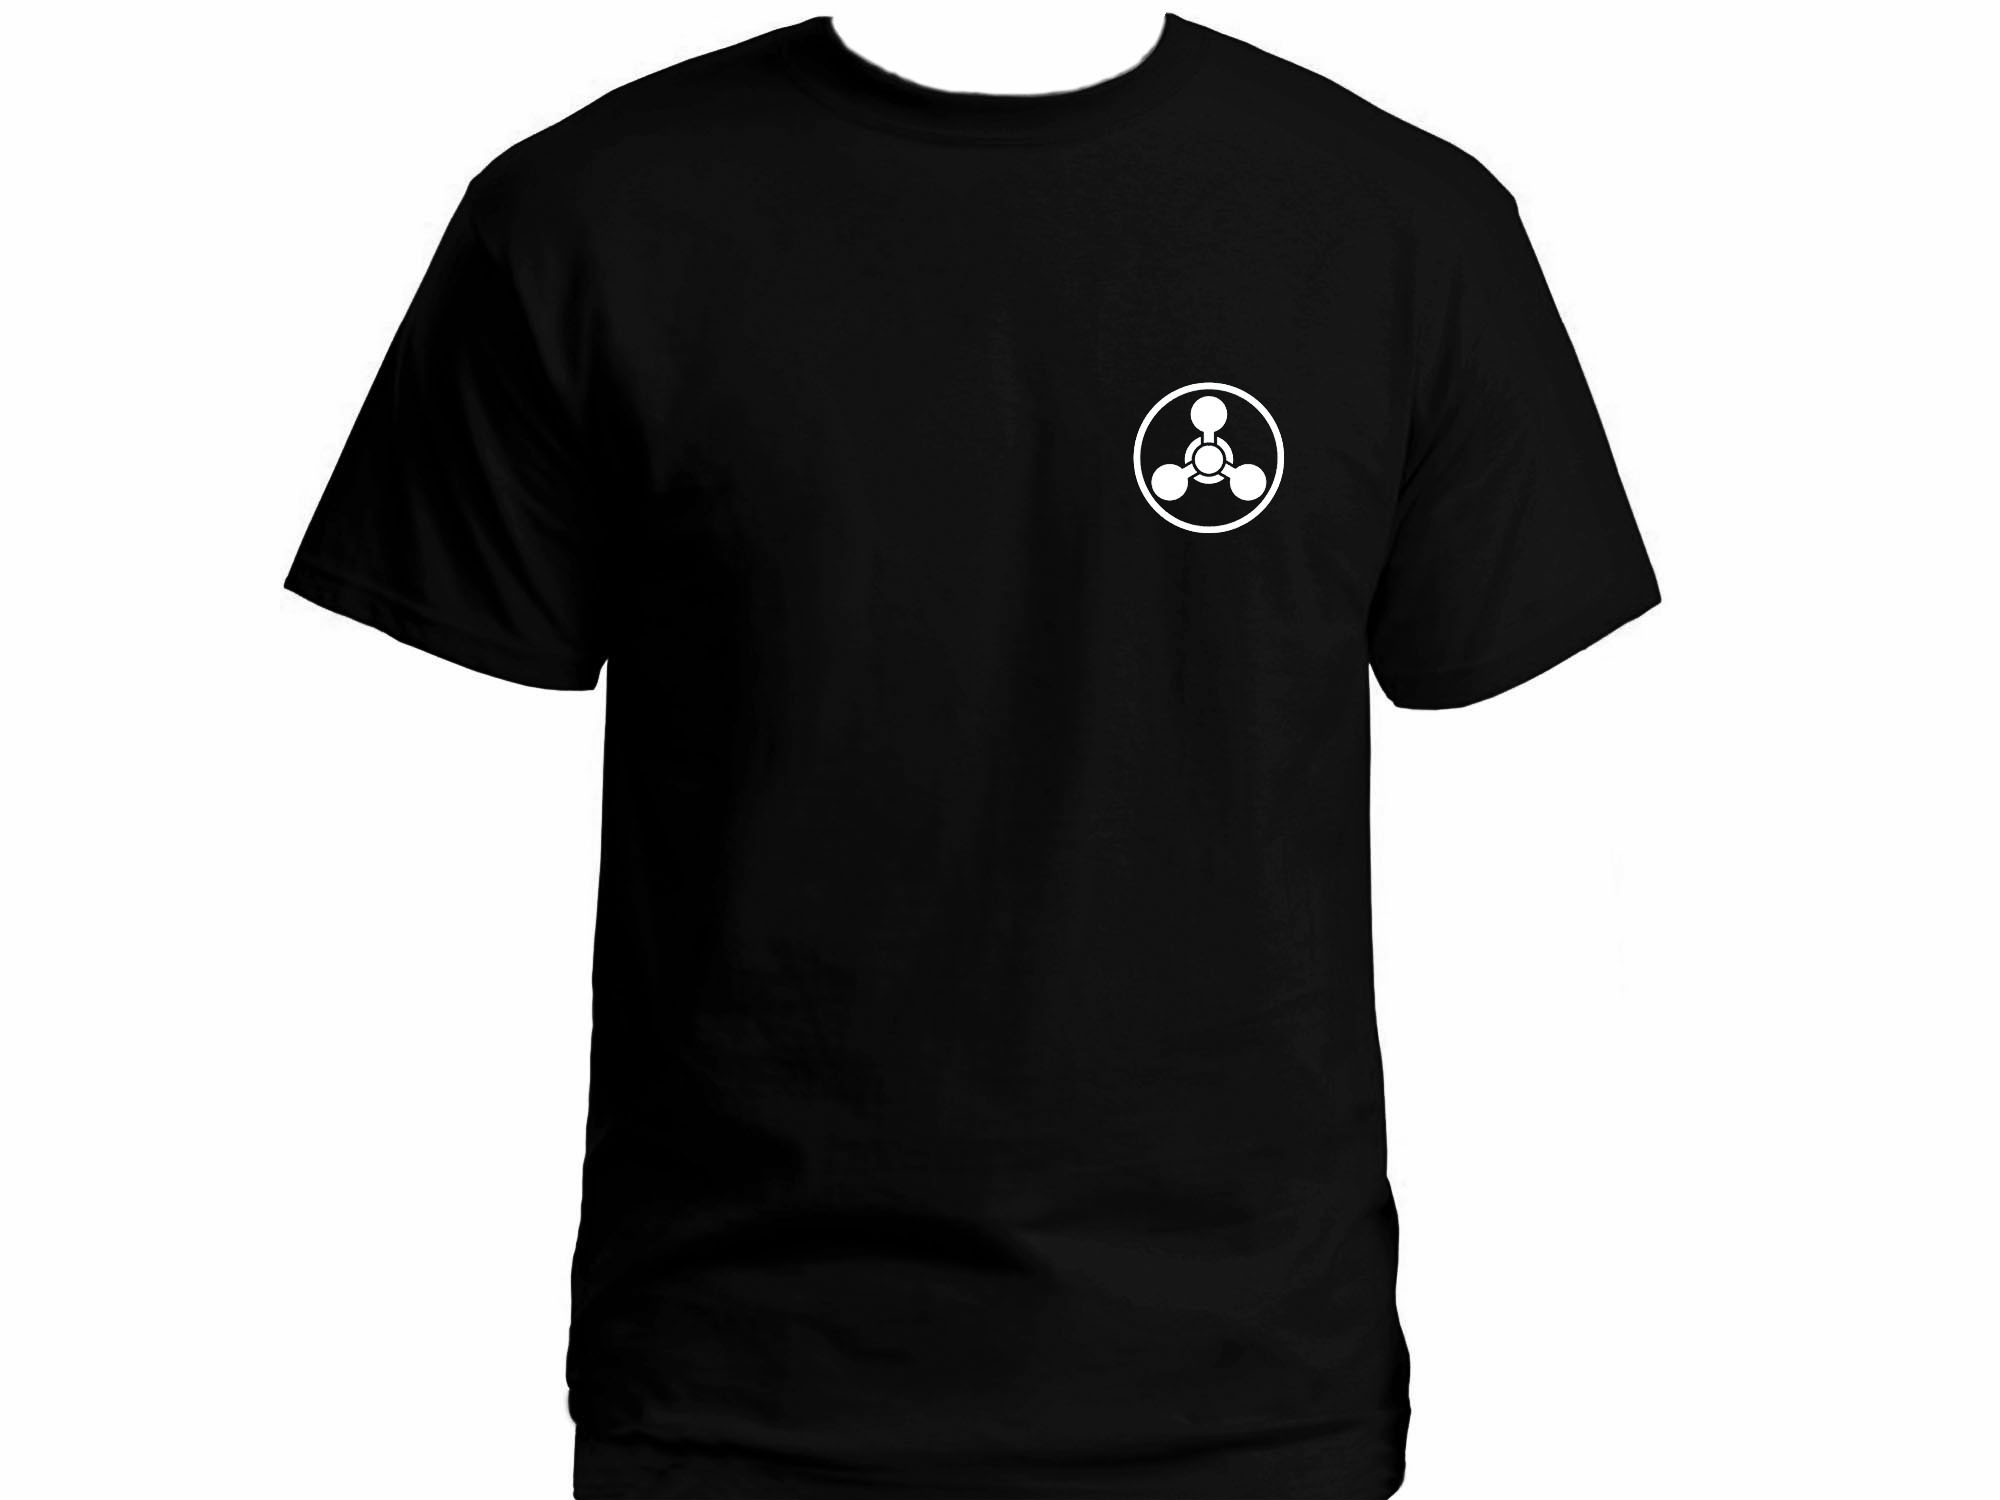 Chemical mass destruction weapon emblem t-shirt